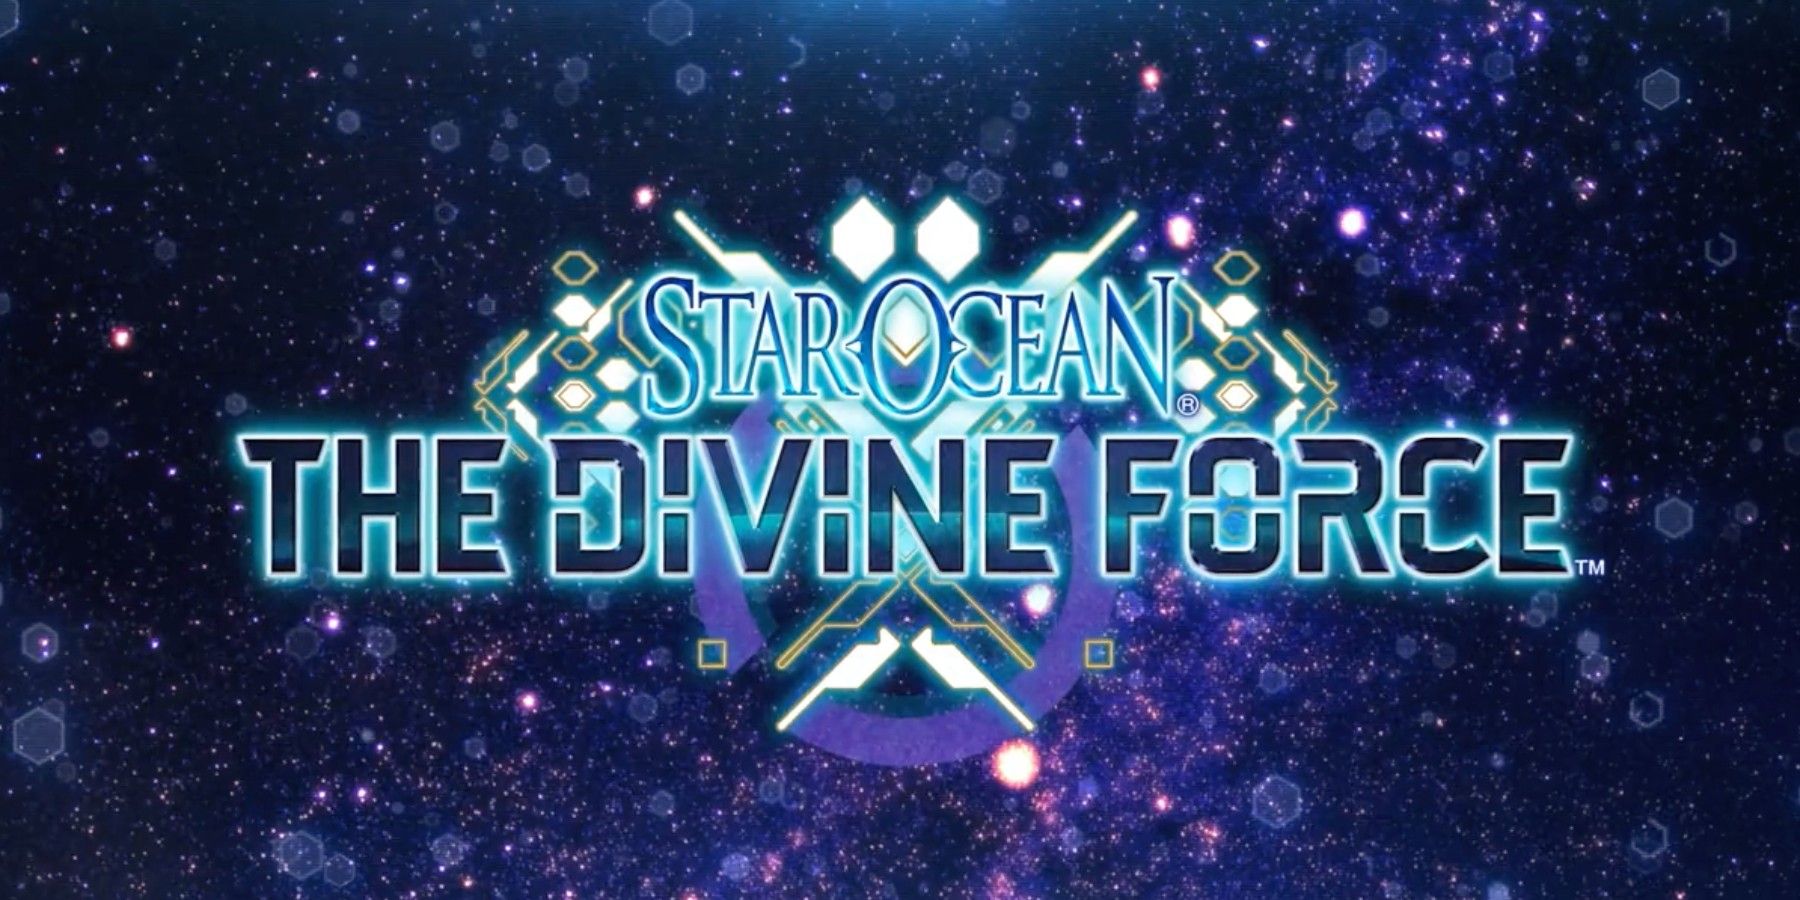 star ocean the divine force trailer focuses on combat